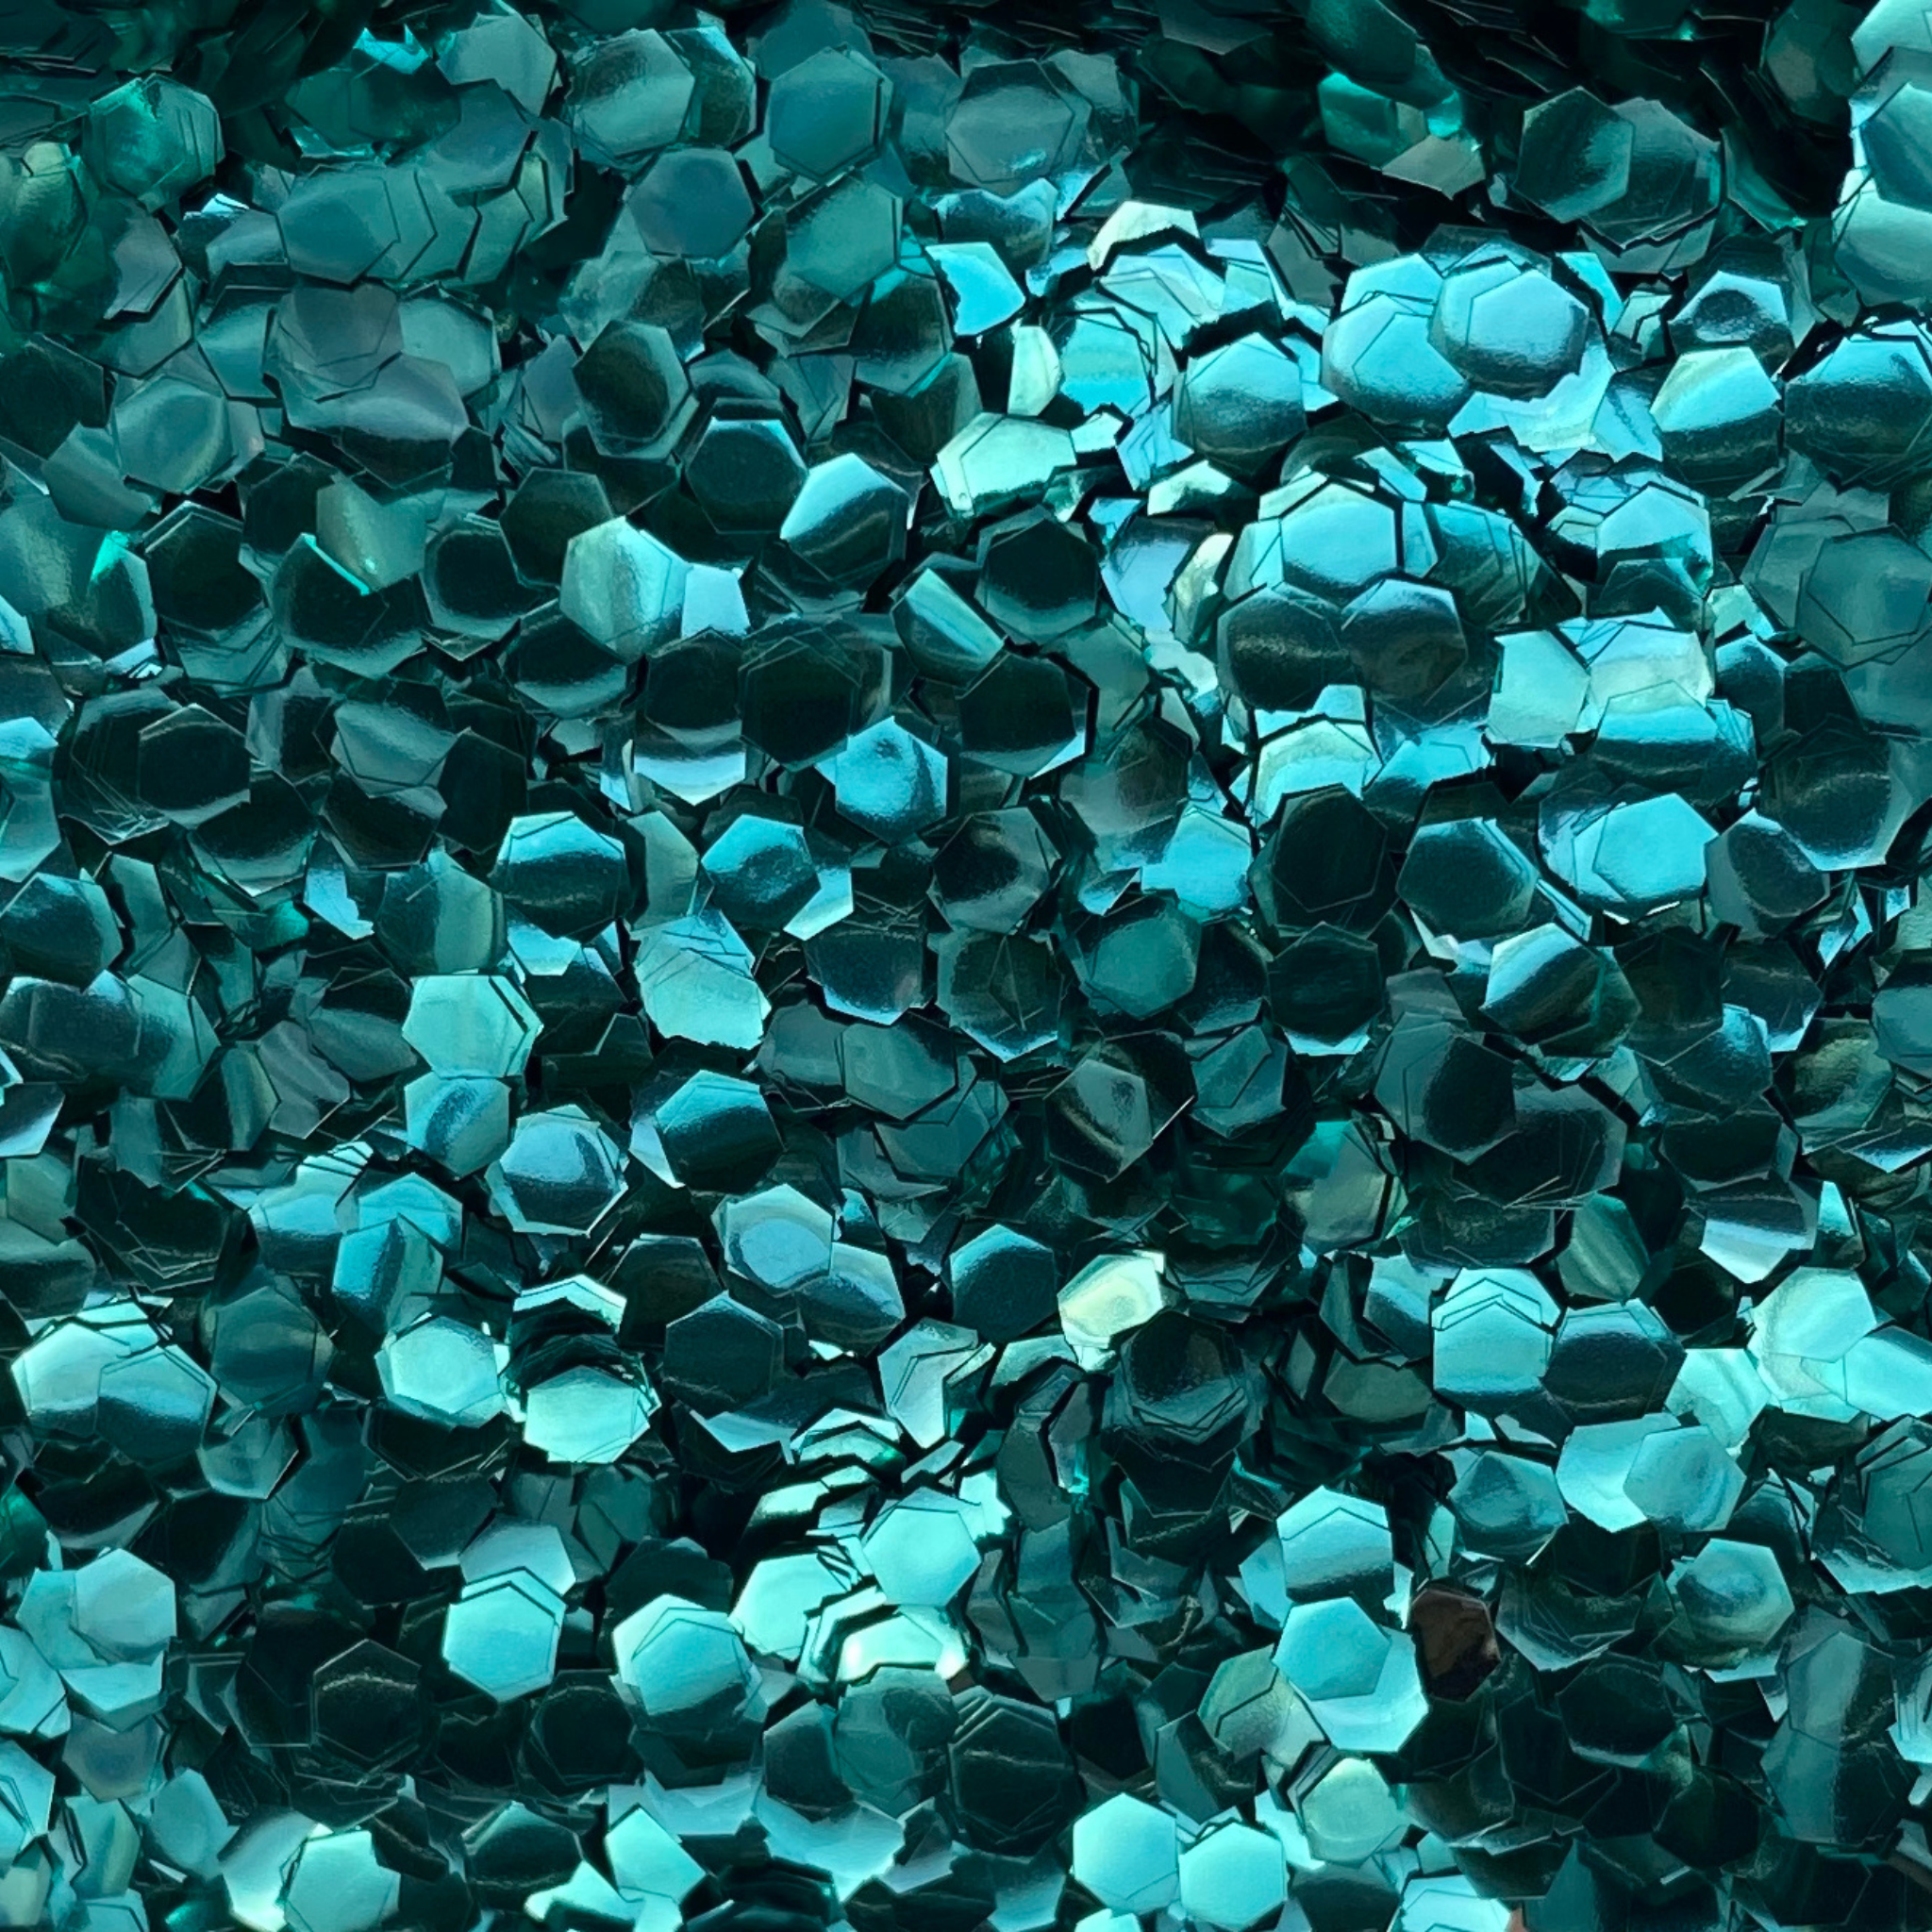 Ultra chunky turquoise biodegradable glitter by Luminosity Glitter